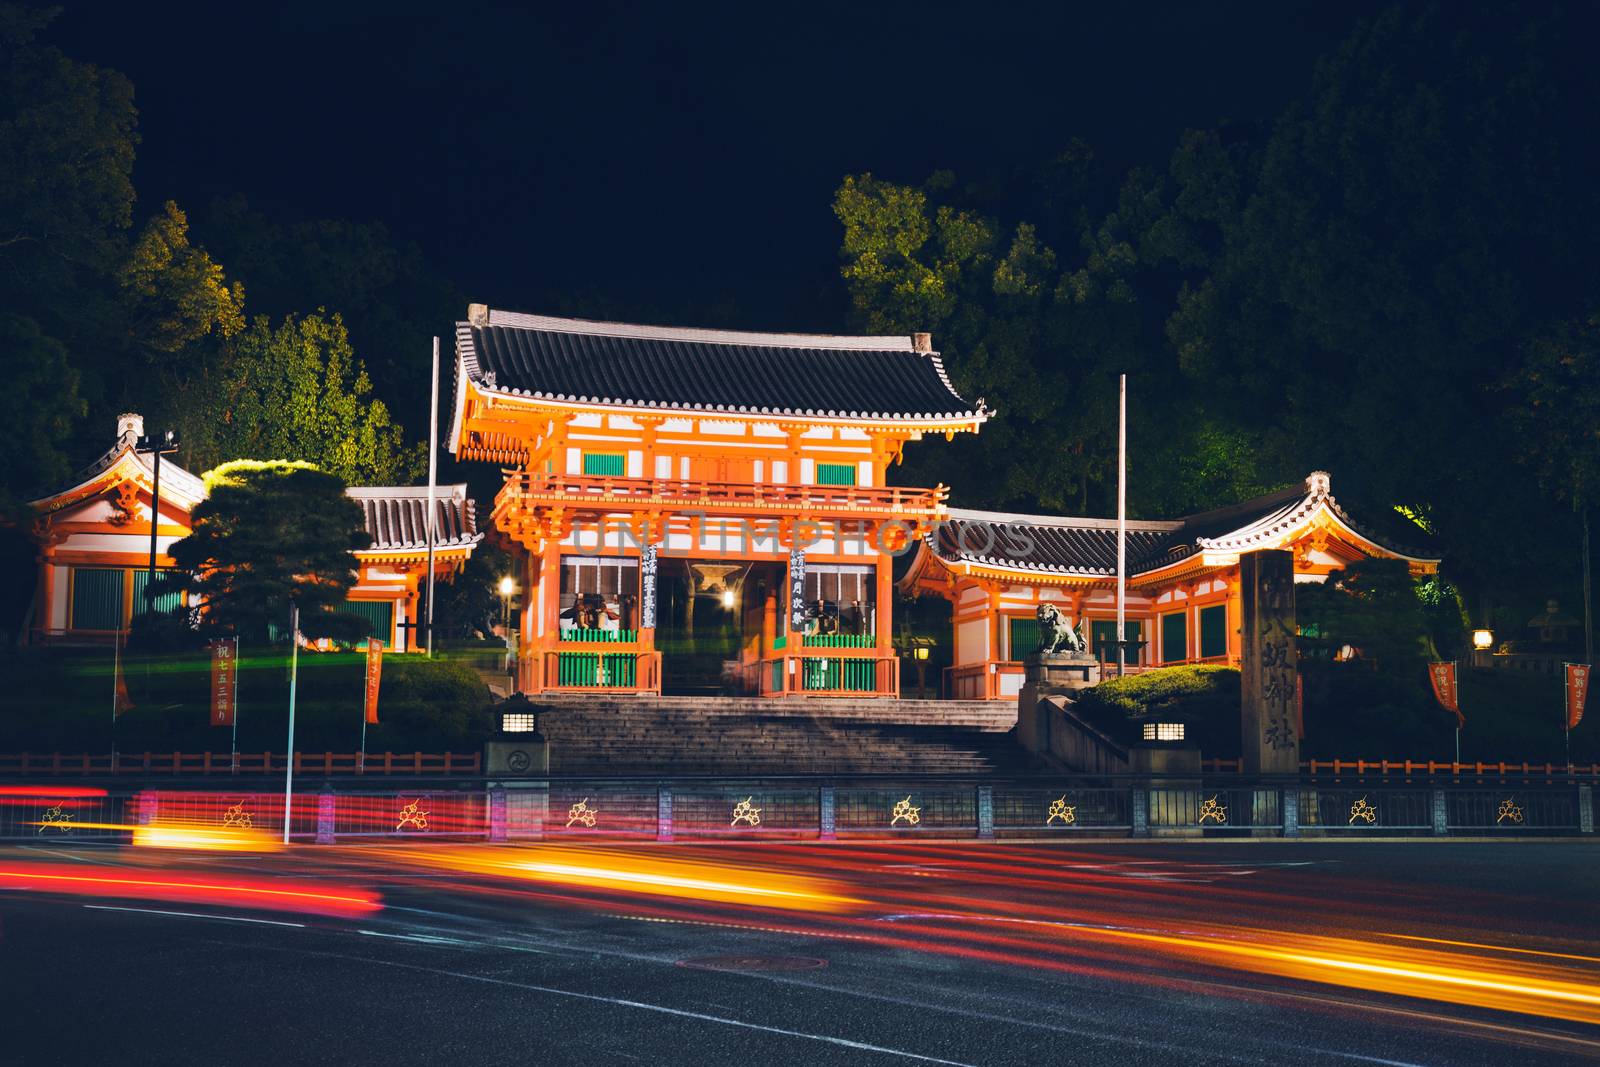 Main gate of the Yasaka shrine in Kyoto at night, Japan.